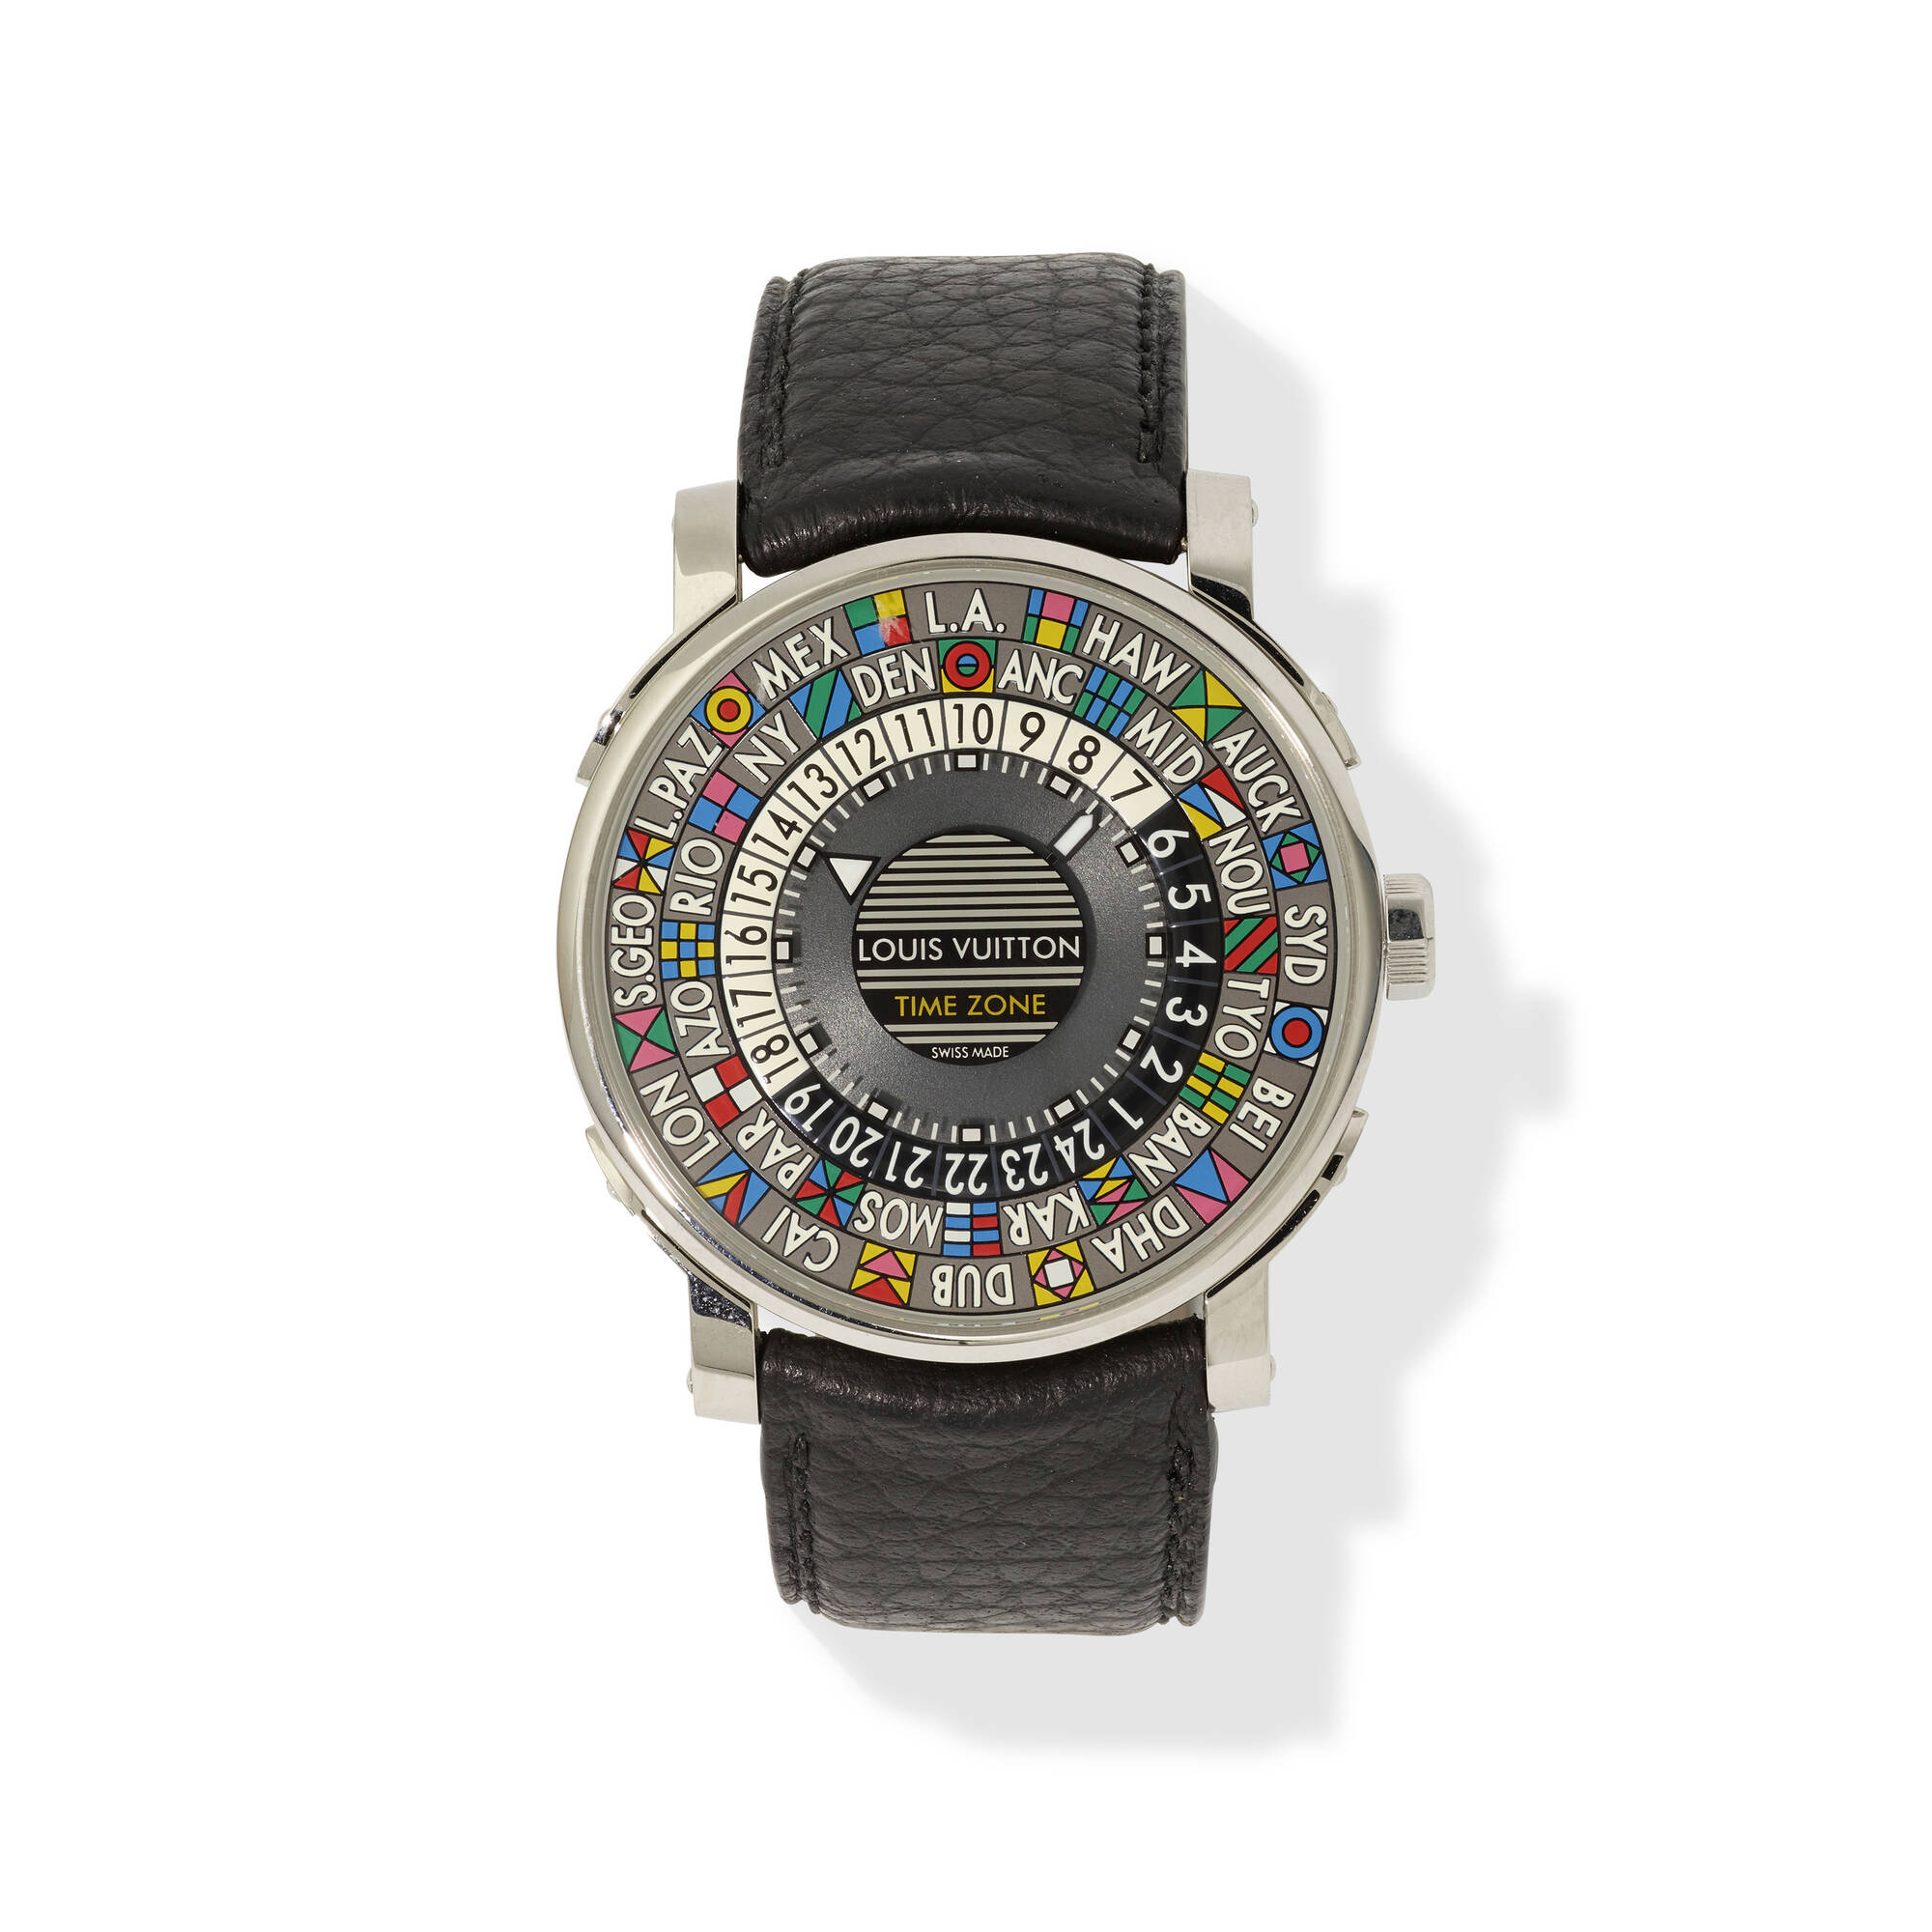 Sold at Auction: Louis Vuitton Clock